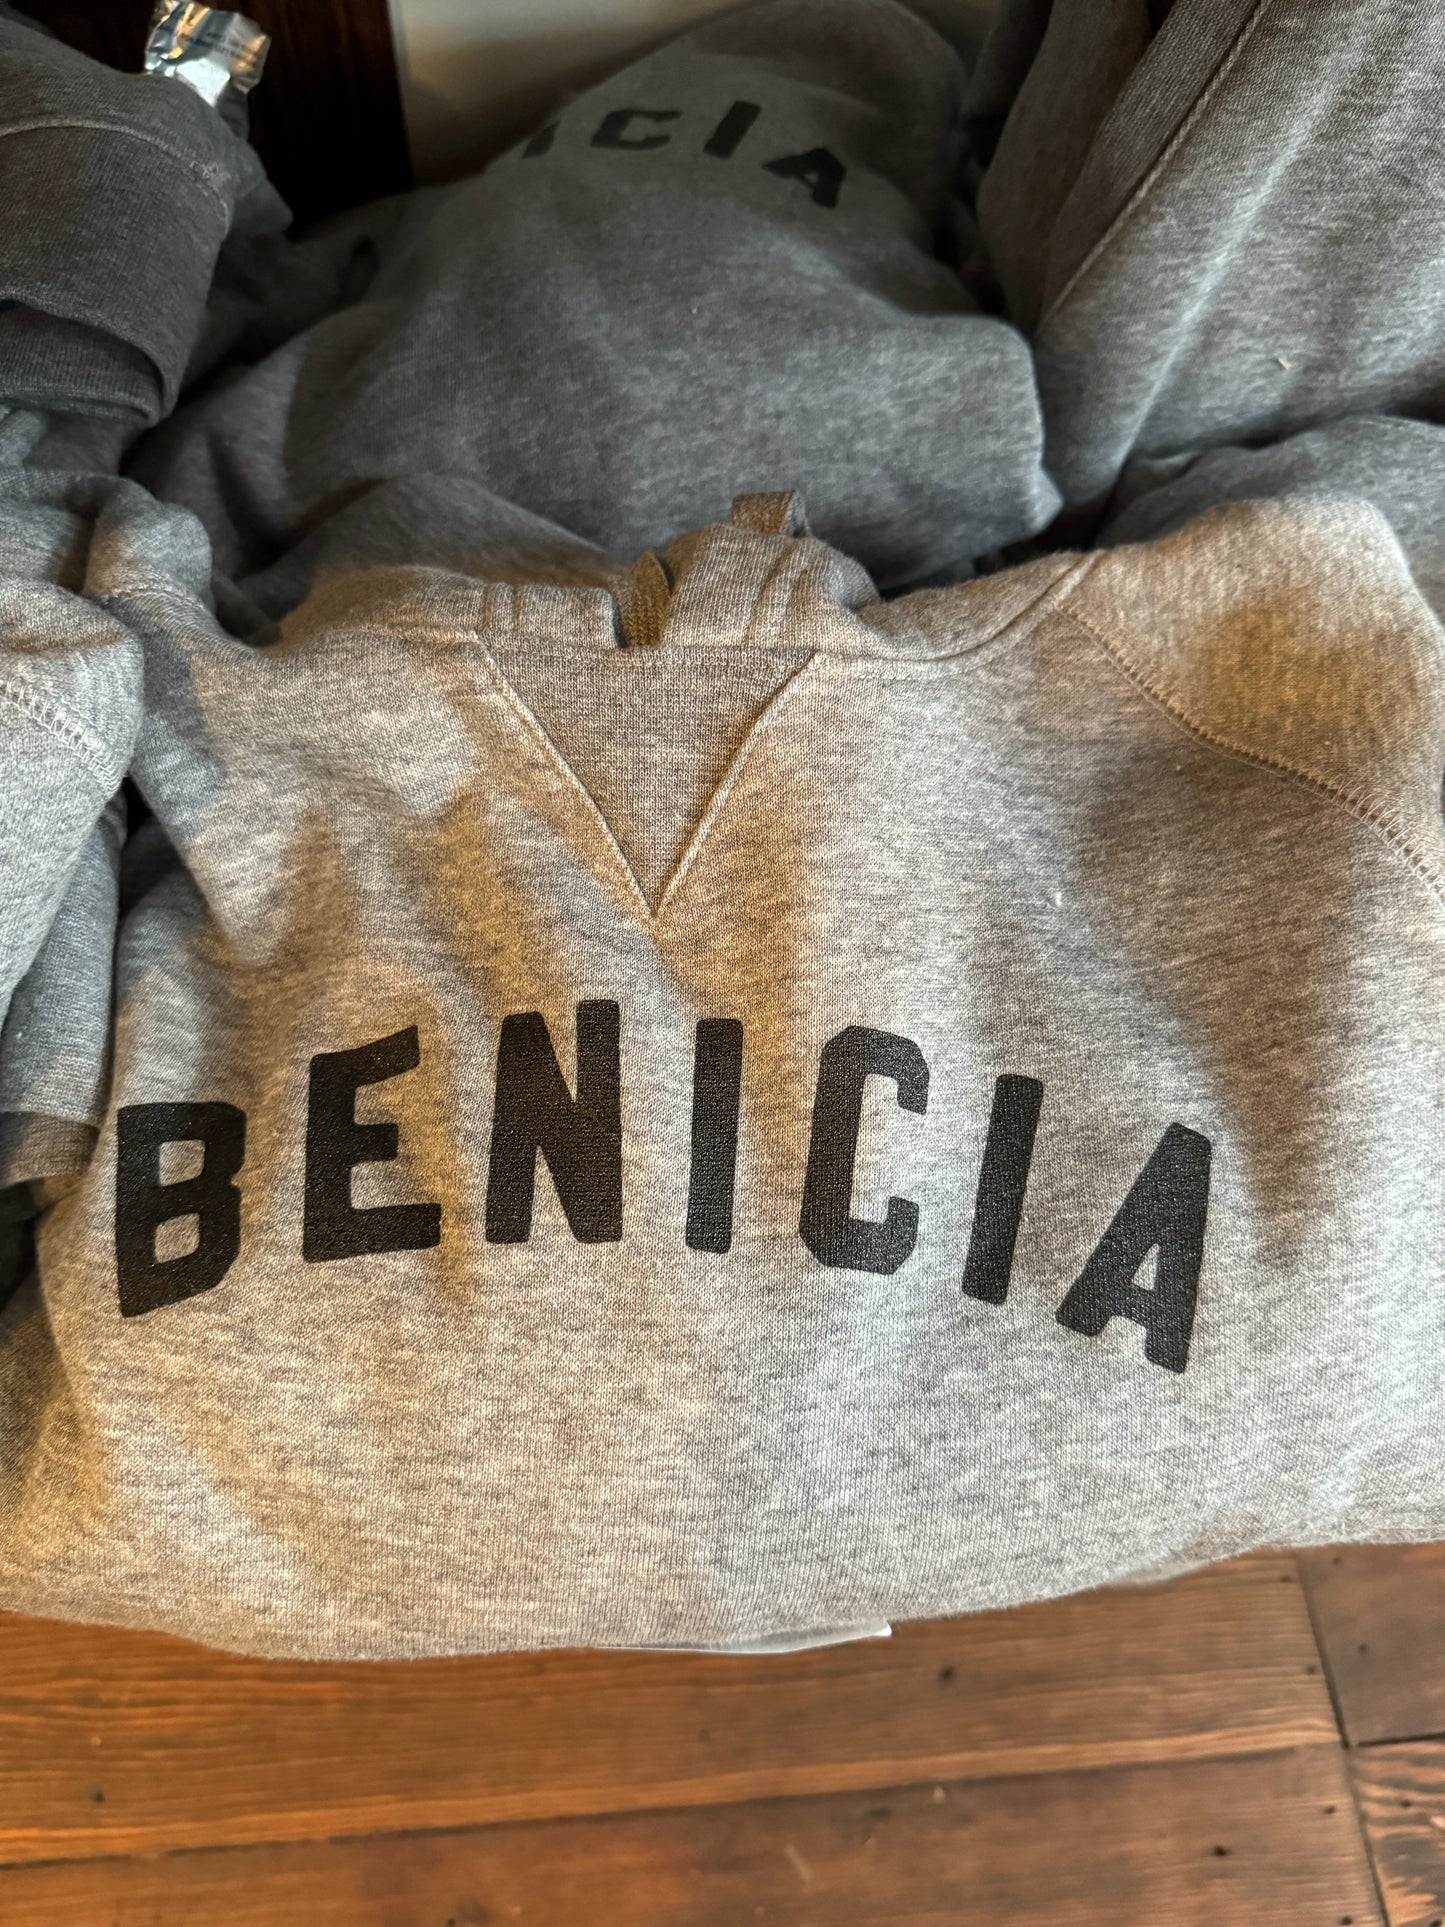 Benicia Hoodie Sweatshirt